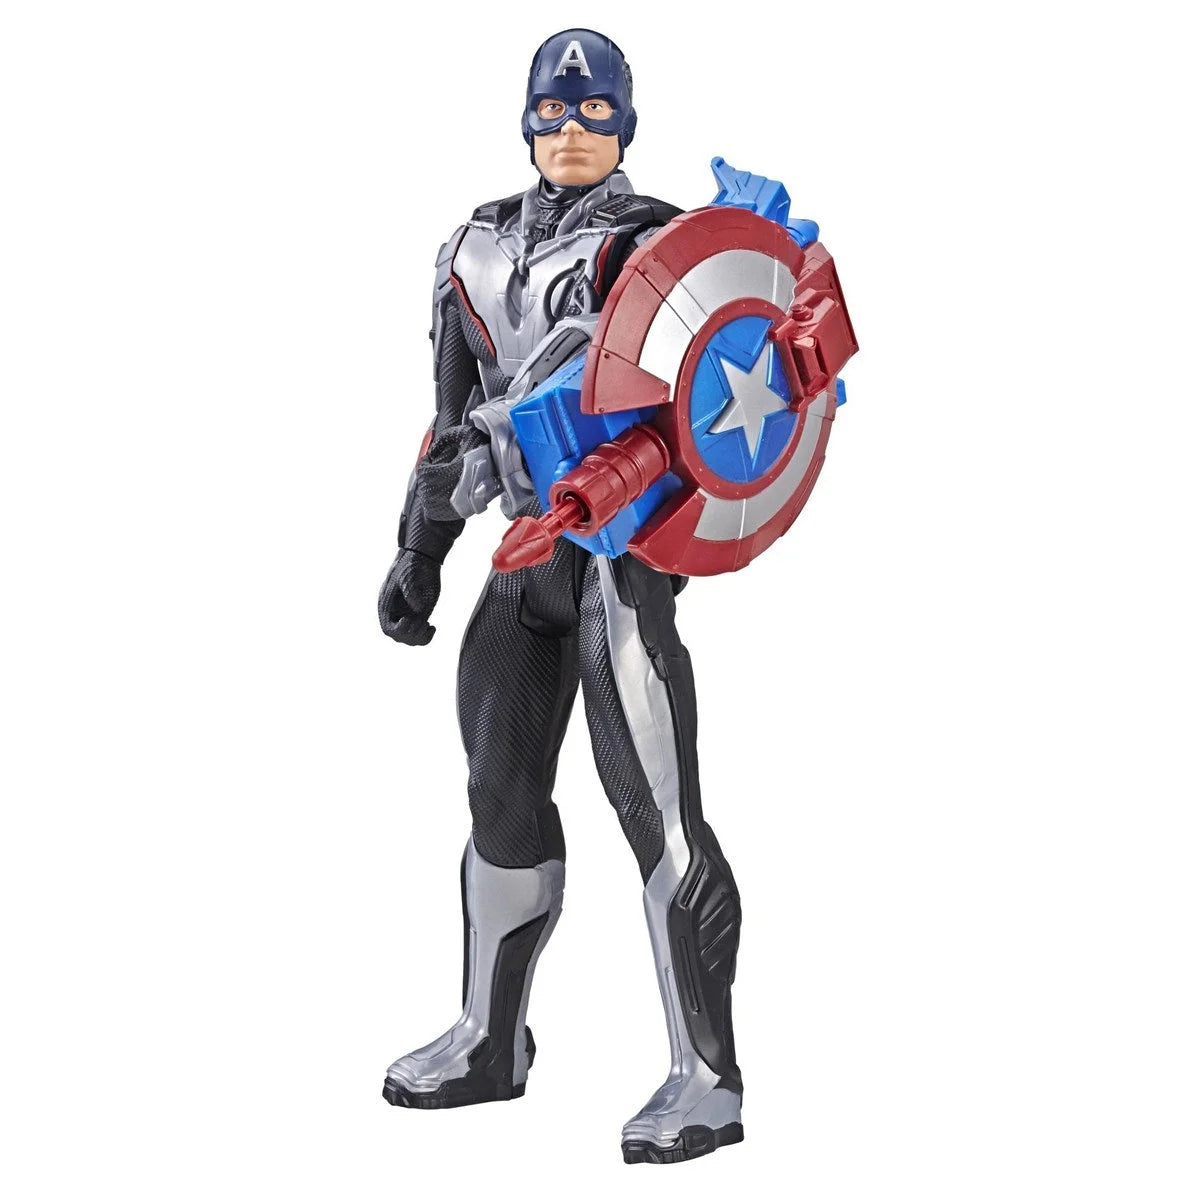 Avengers Endgame Tıtan Hero C.Amerıca Figür E3301 | Toysall